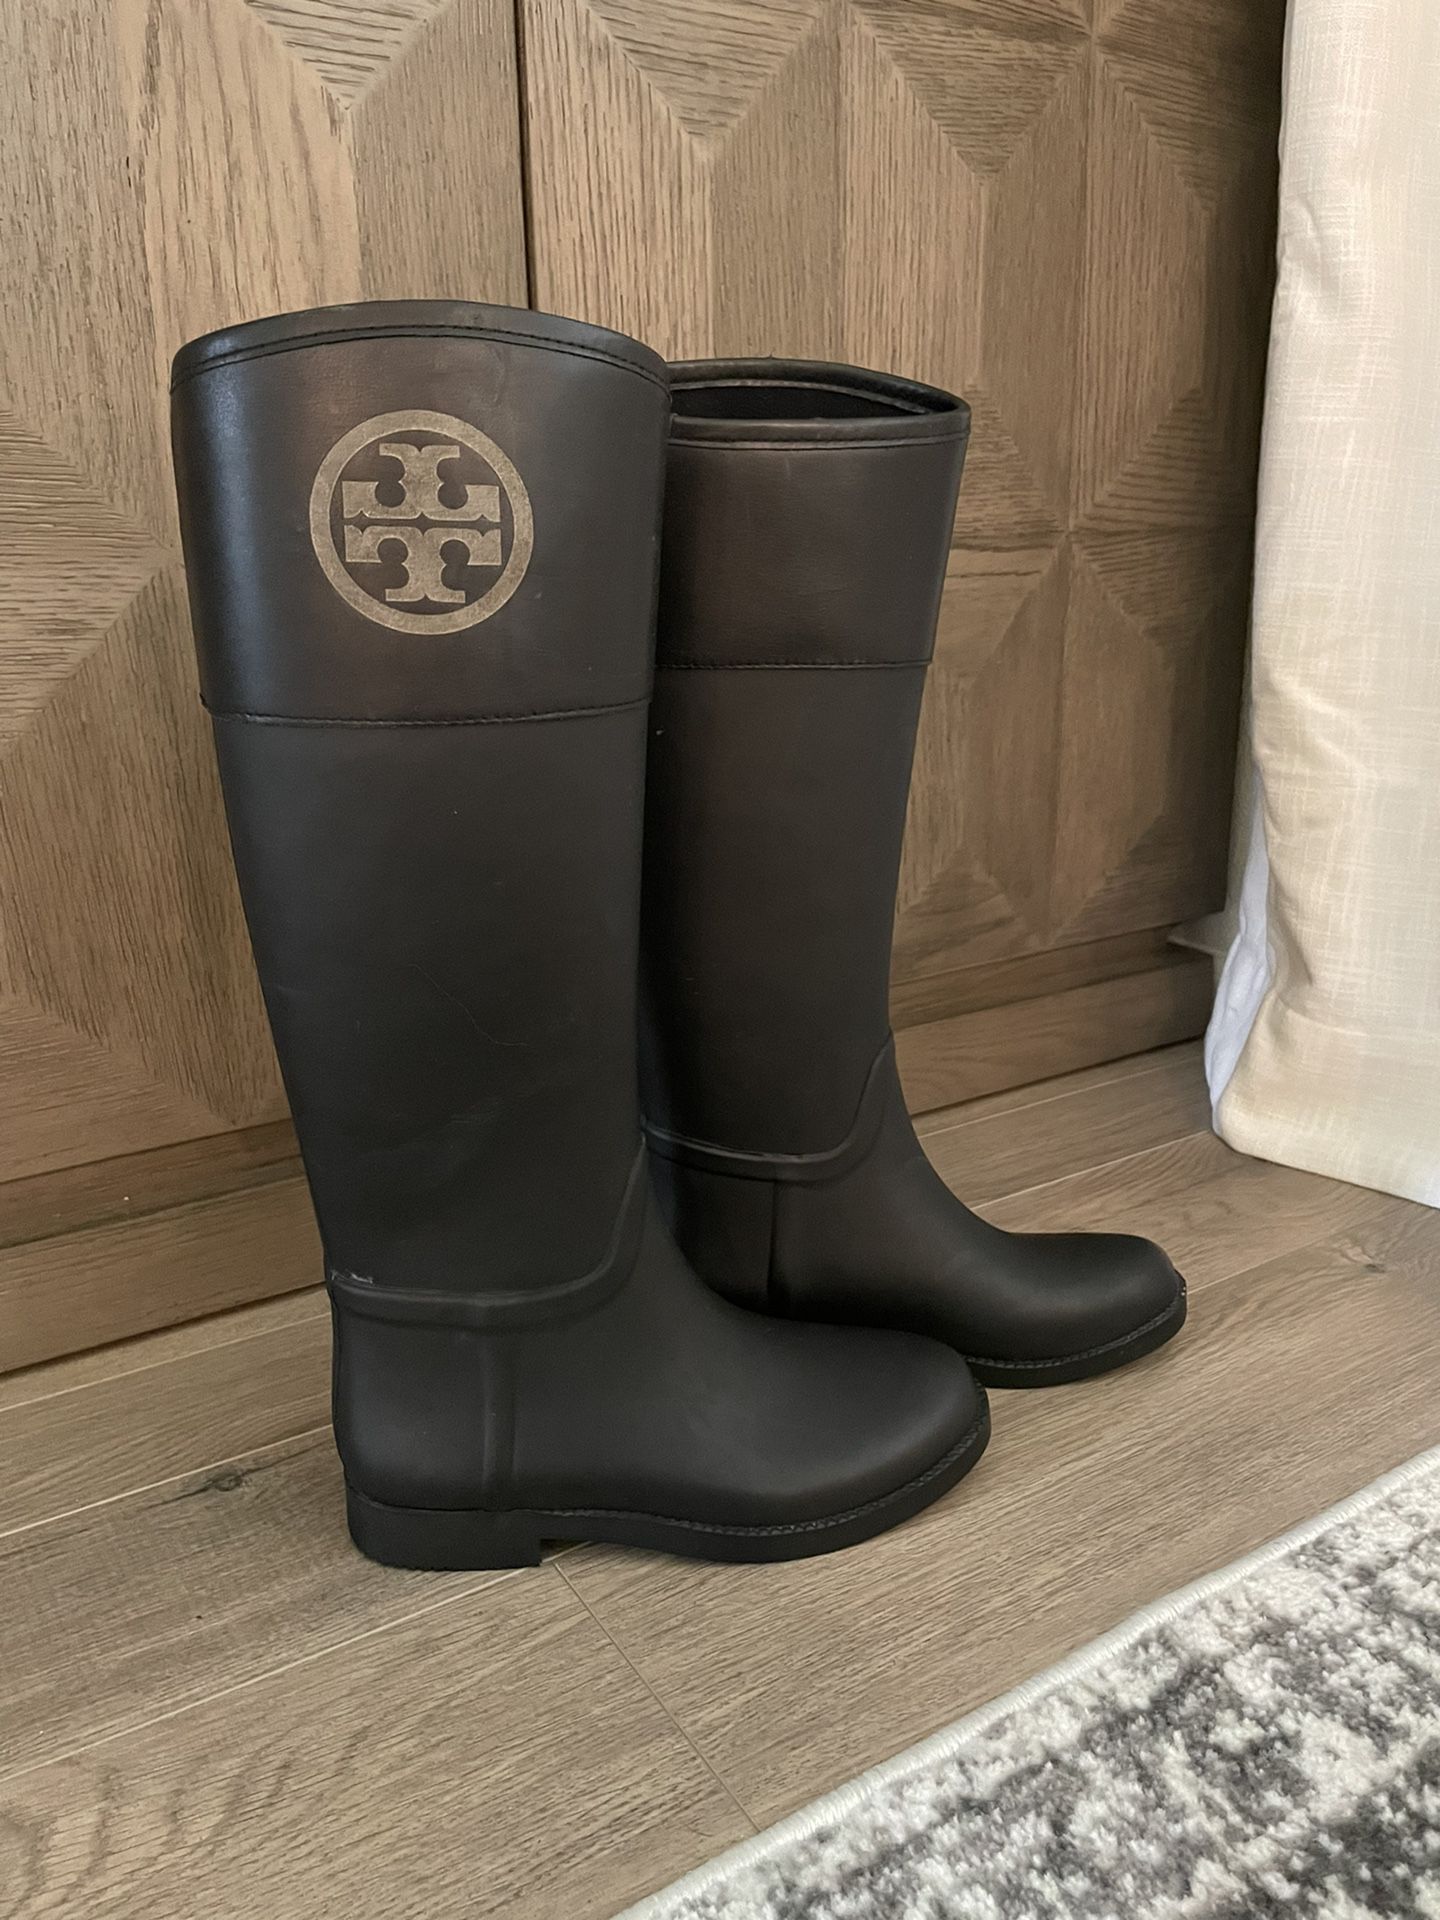 Tory Burch Rain Boot Size 7